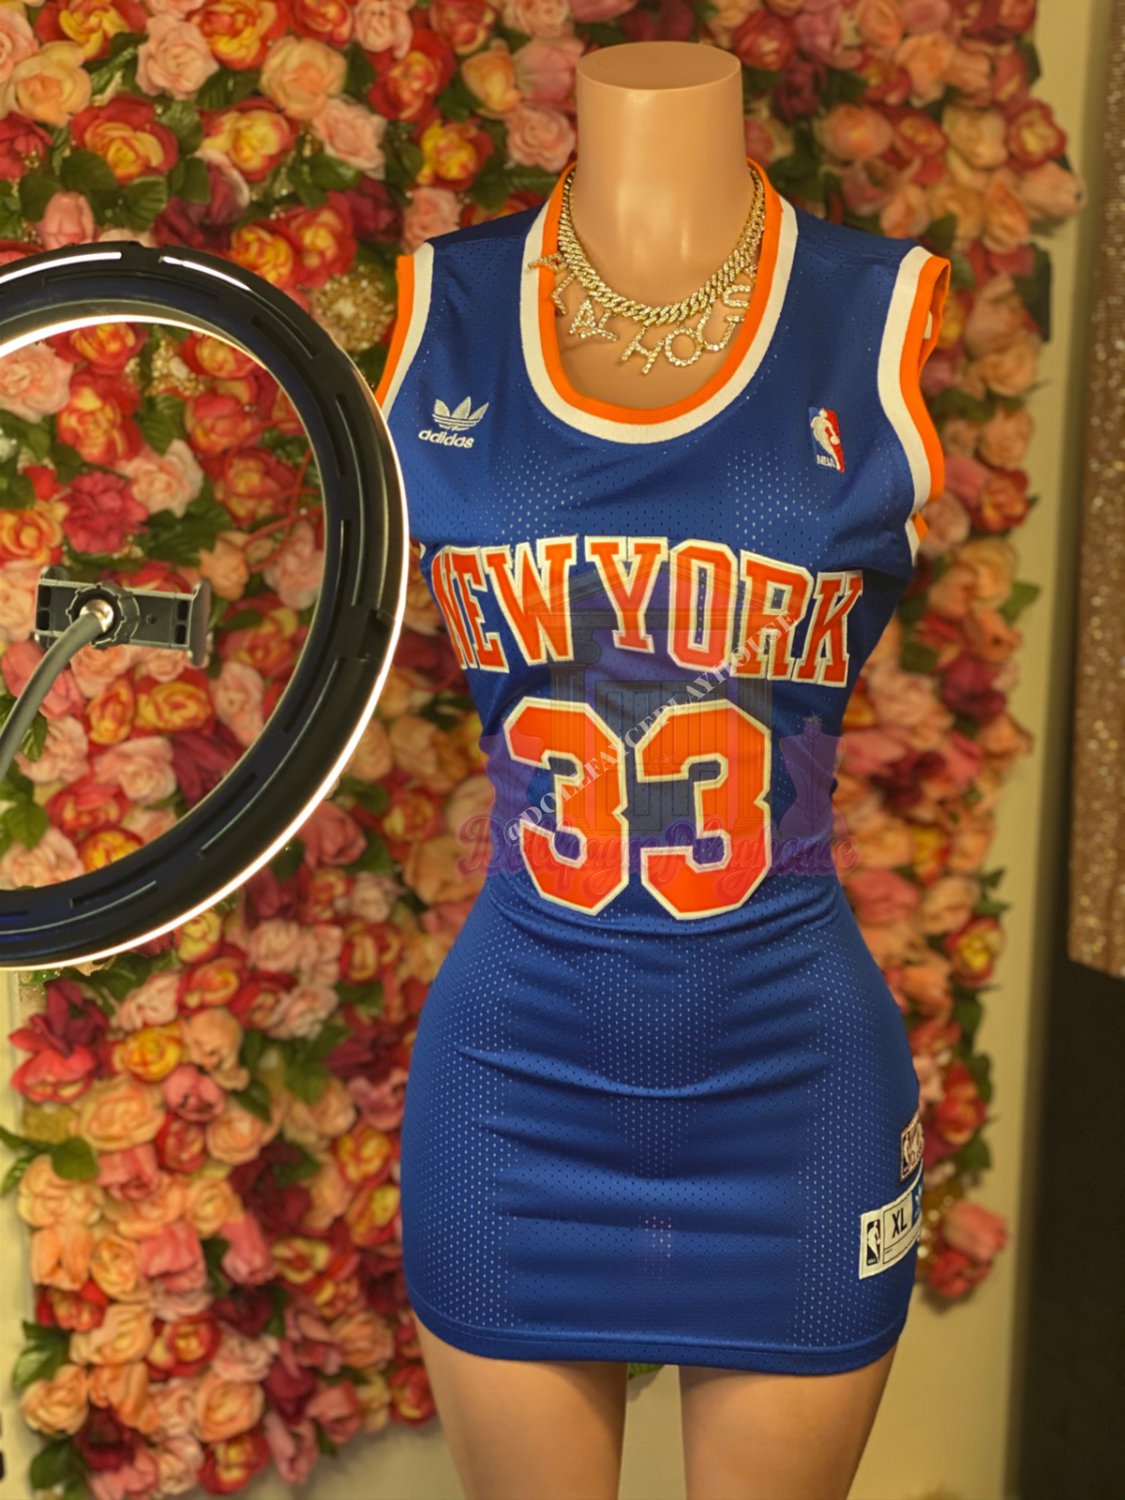 New York Knicks - Dress to impress 👔 Some of the best